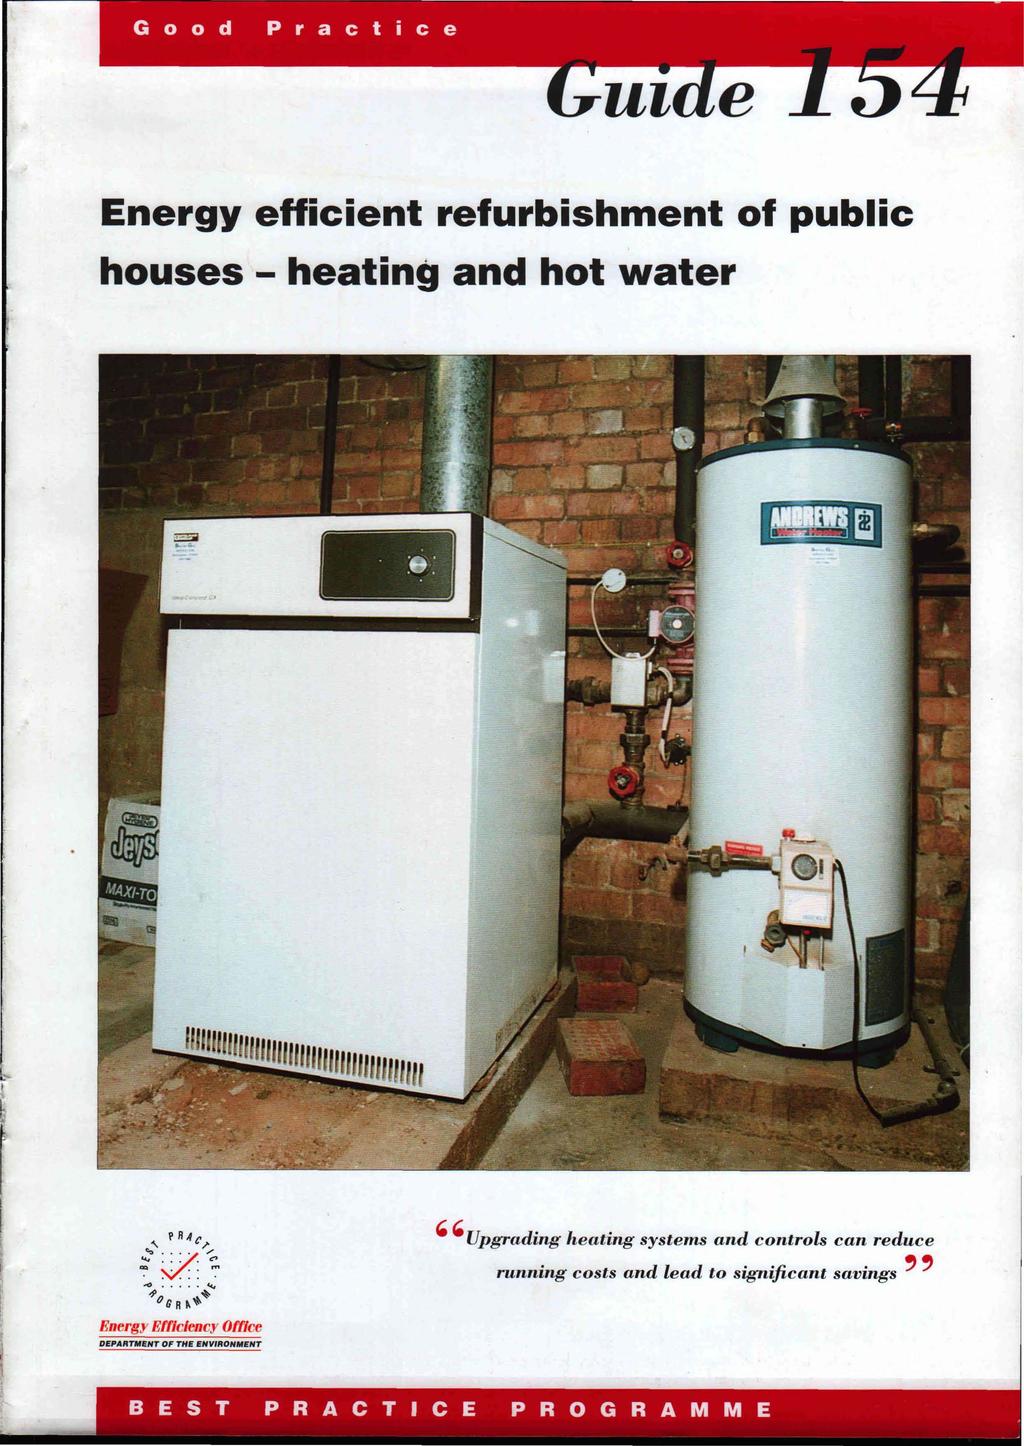 Energy efficient refurbishment of public houses - heating and hot water '\ ~ R,fc/, ':: 7 : : -;' IZ:I '".